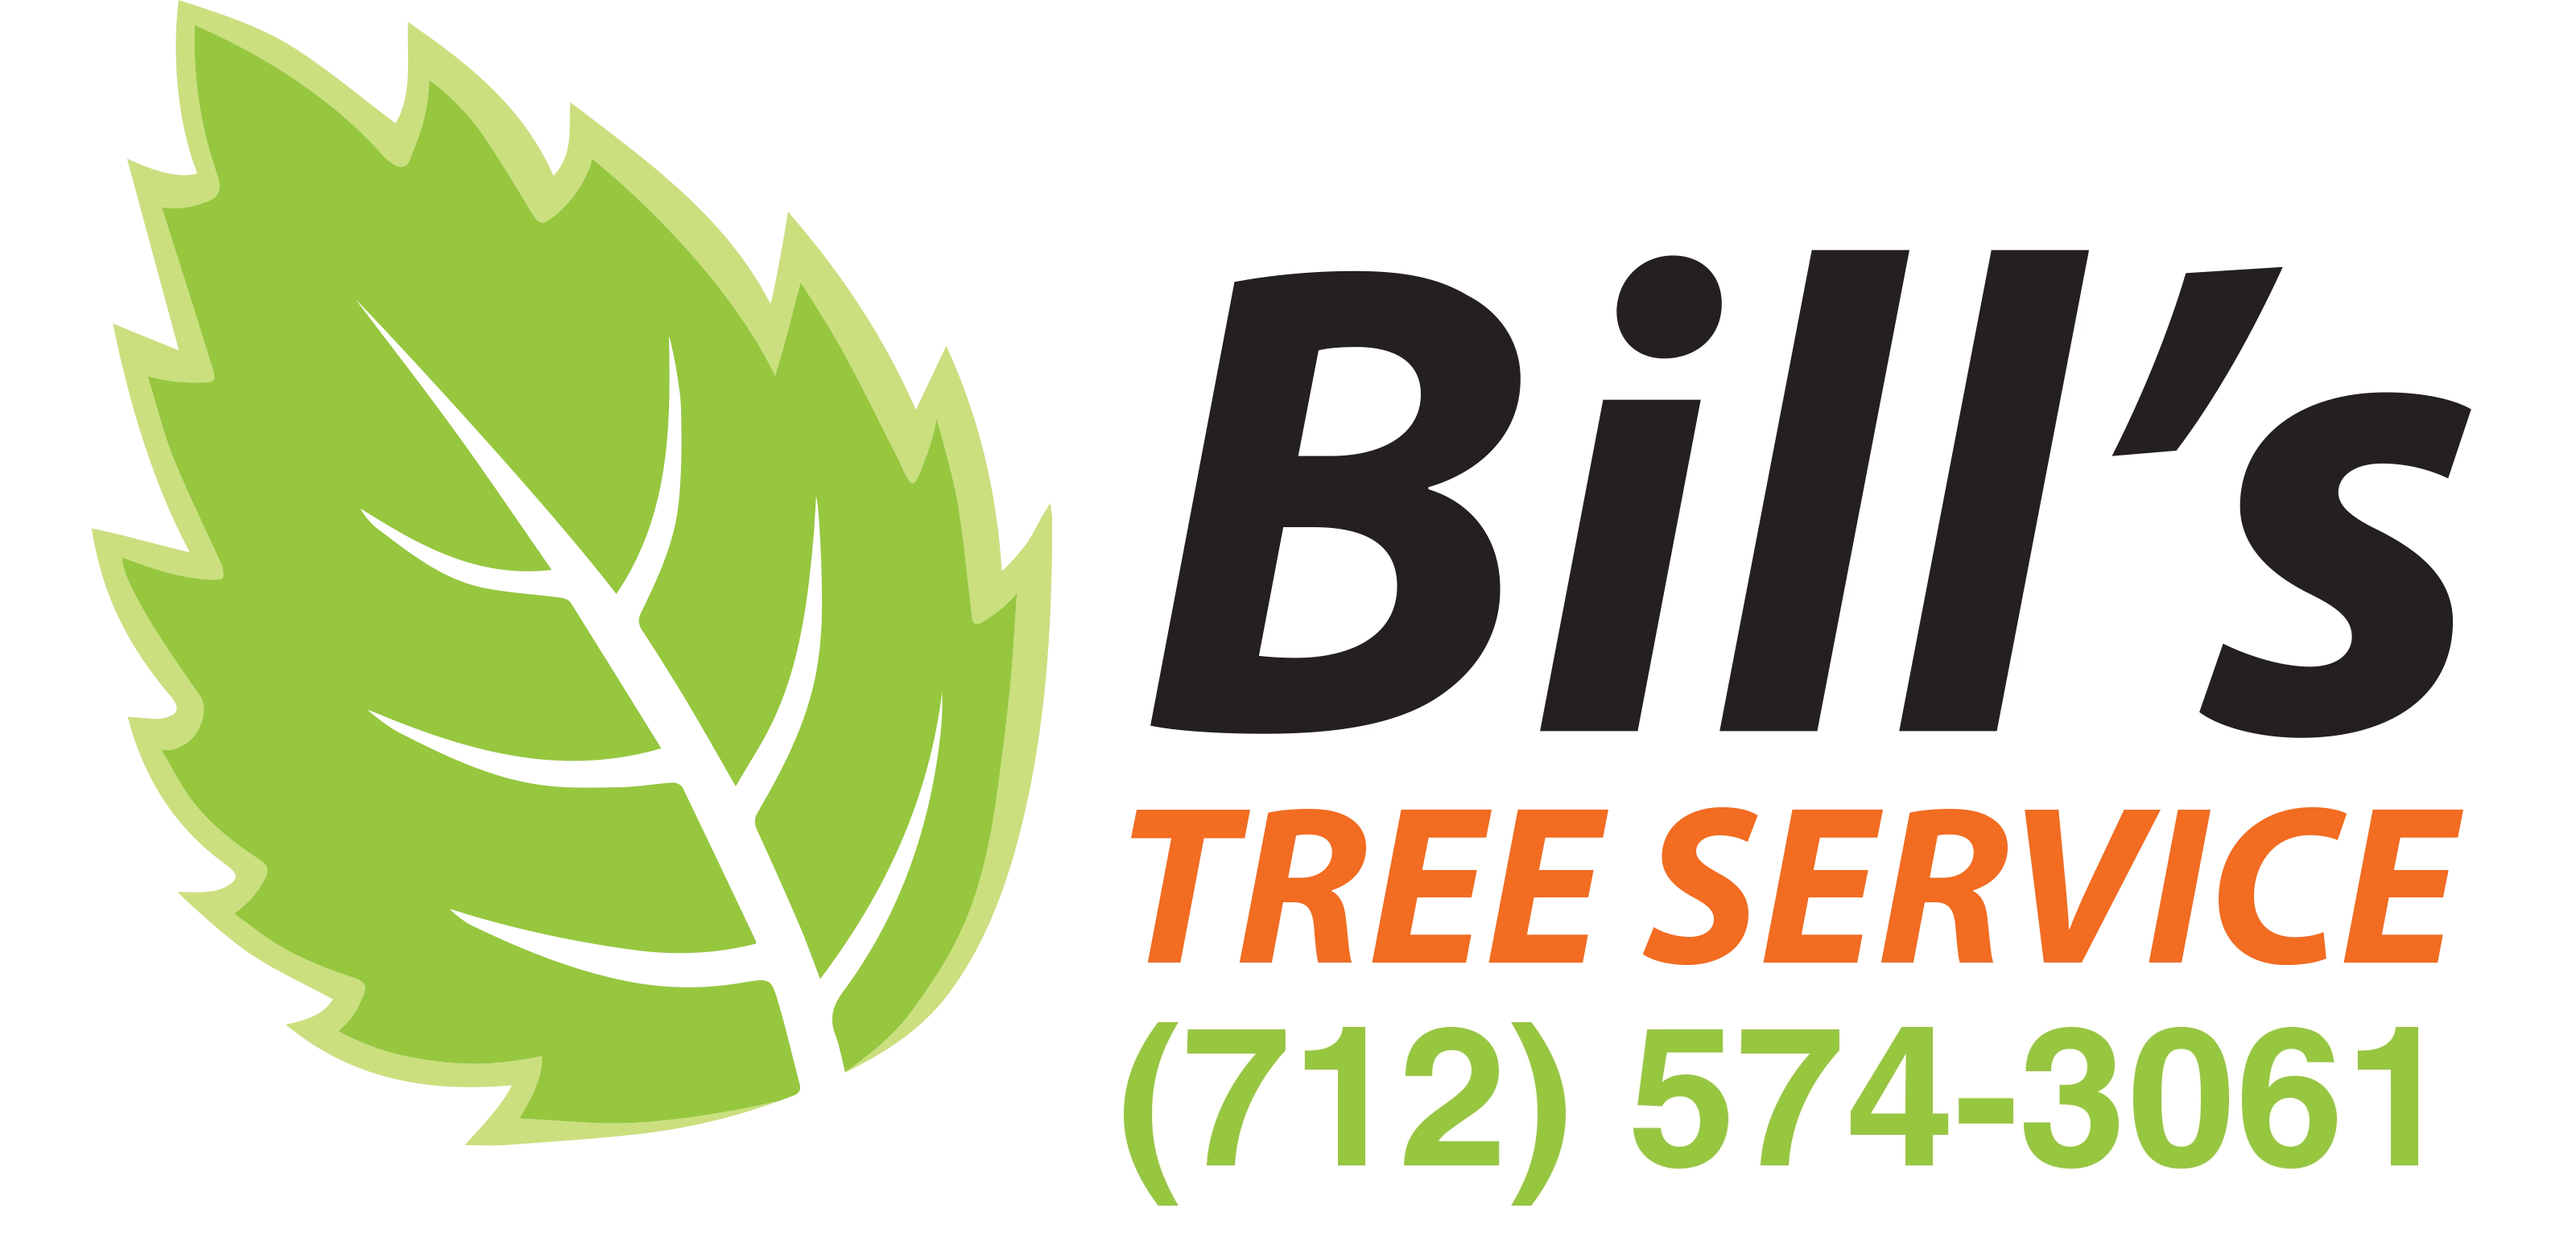 Bill's Tree Service Logo